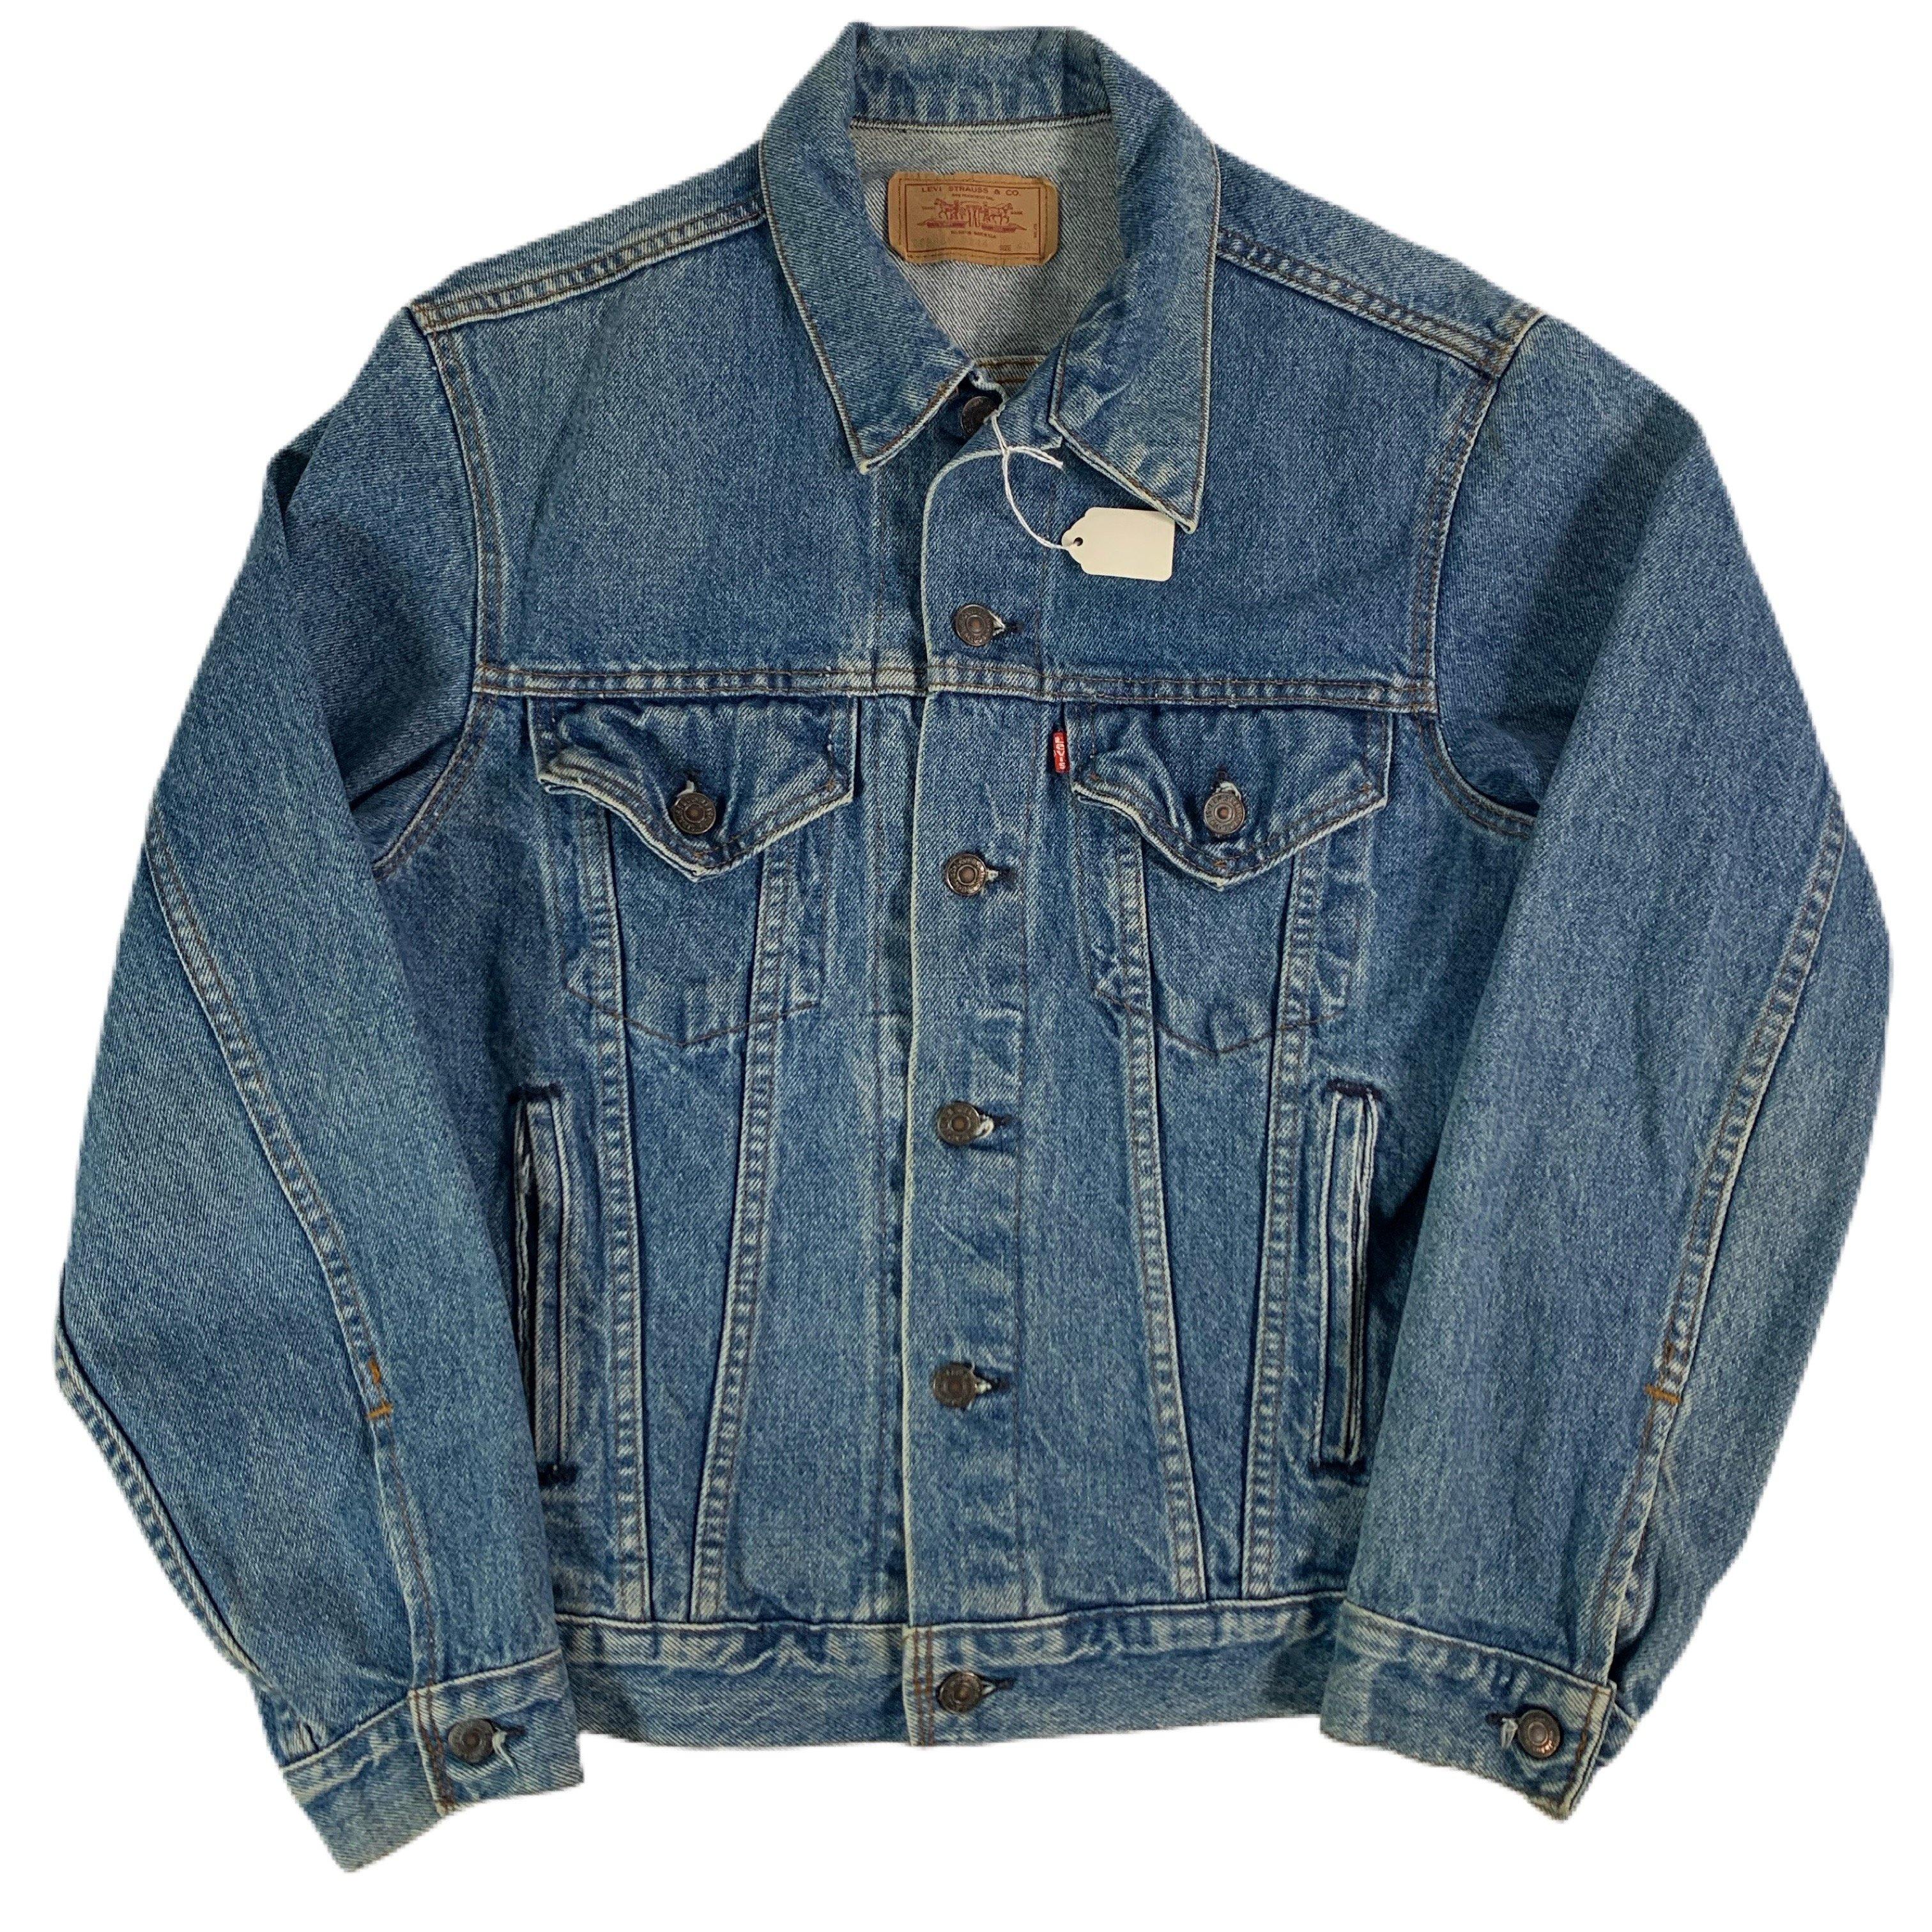 Levis/80s 70506 denim jacket made in USA - Gジャン/デニムジャケット